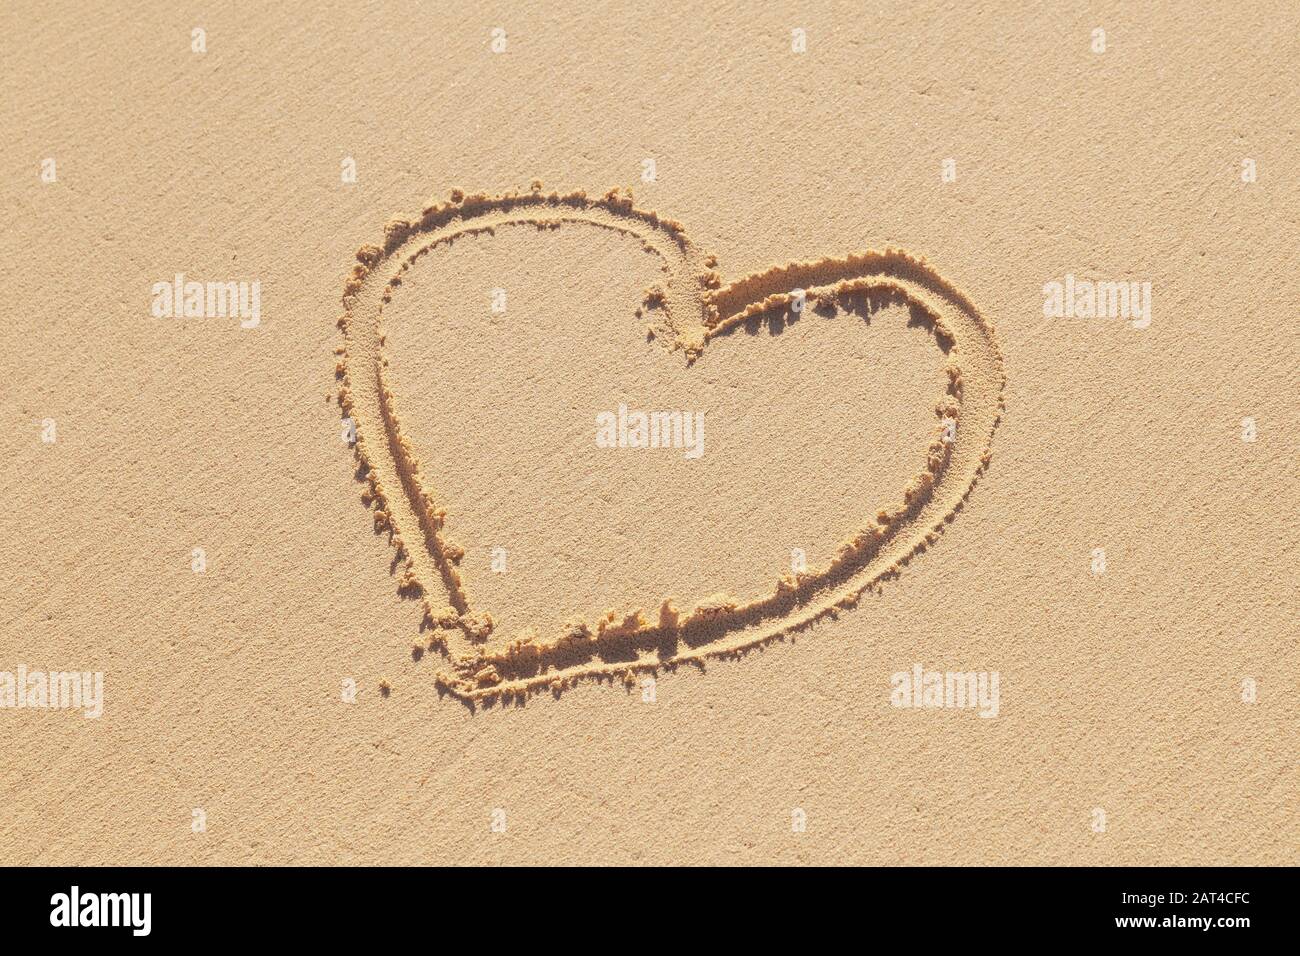 Hand-drawn heart sign is on a coastal sand, a holiday romance metaphor Stock Photo